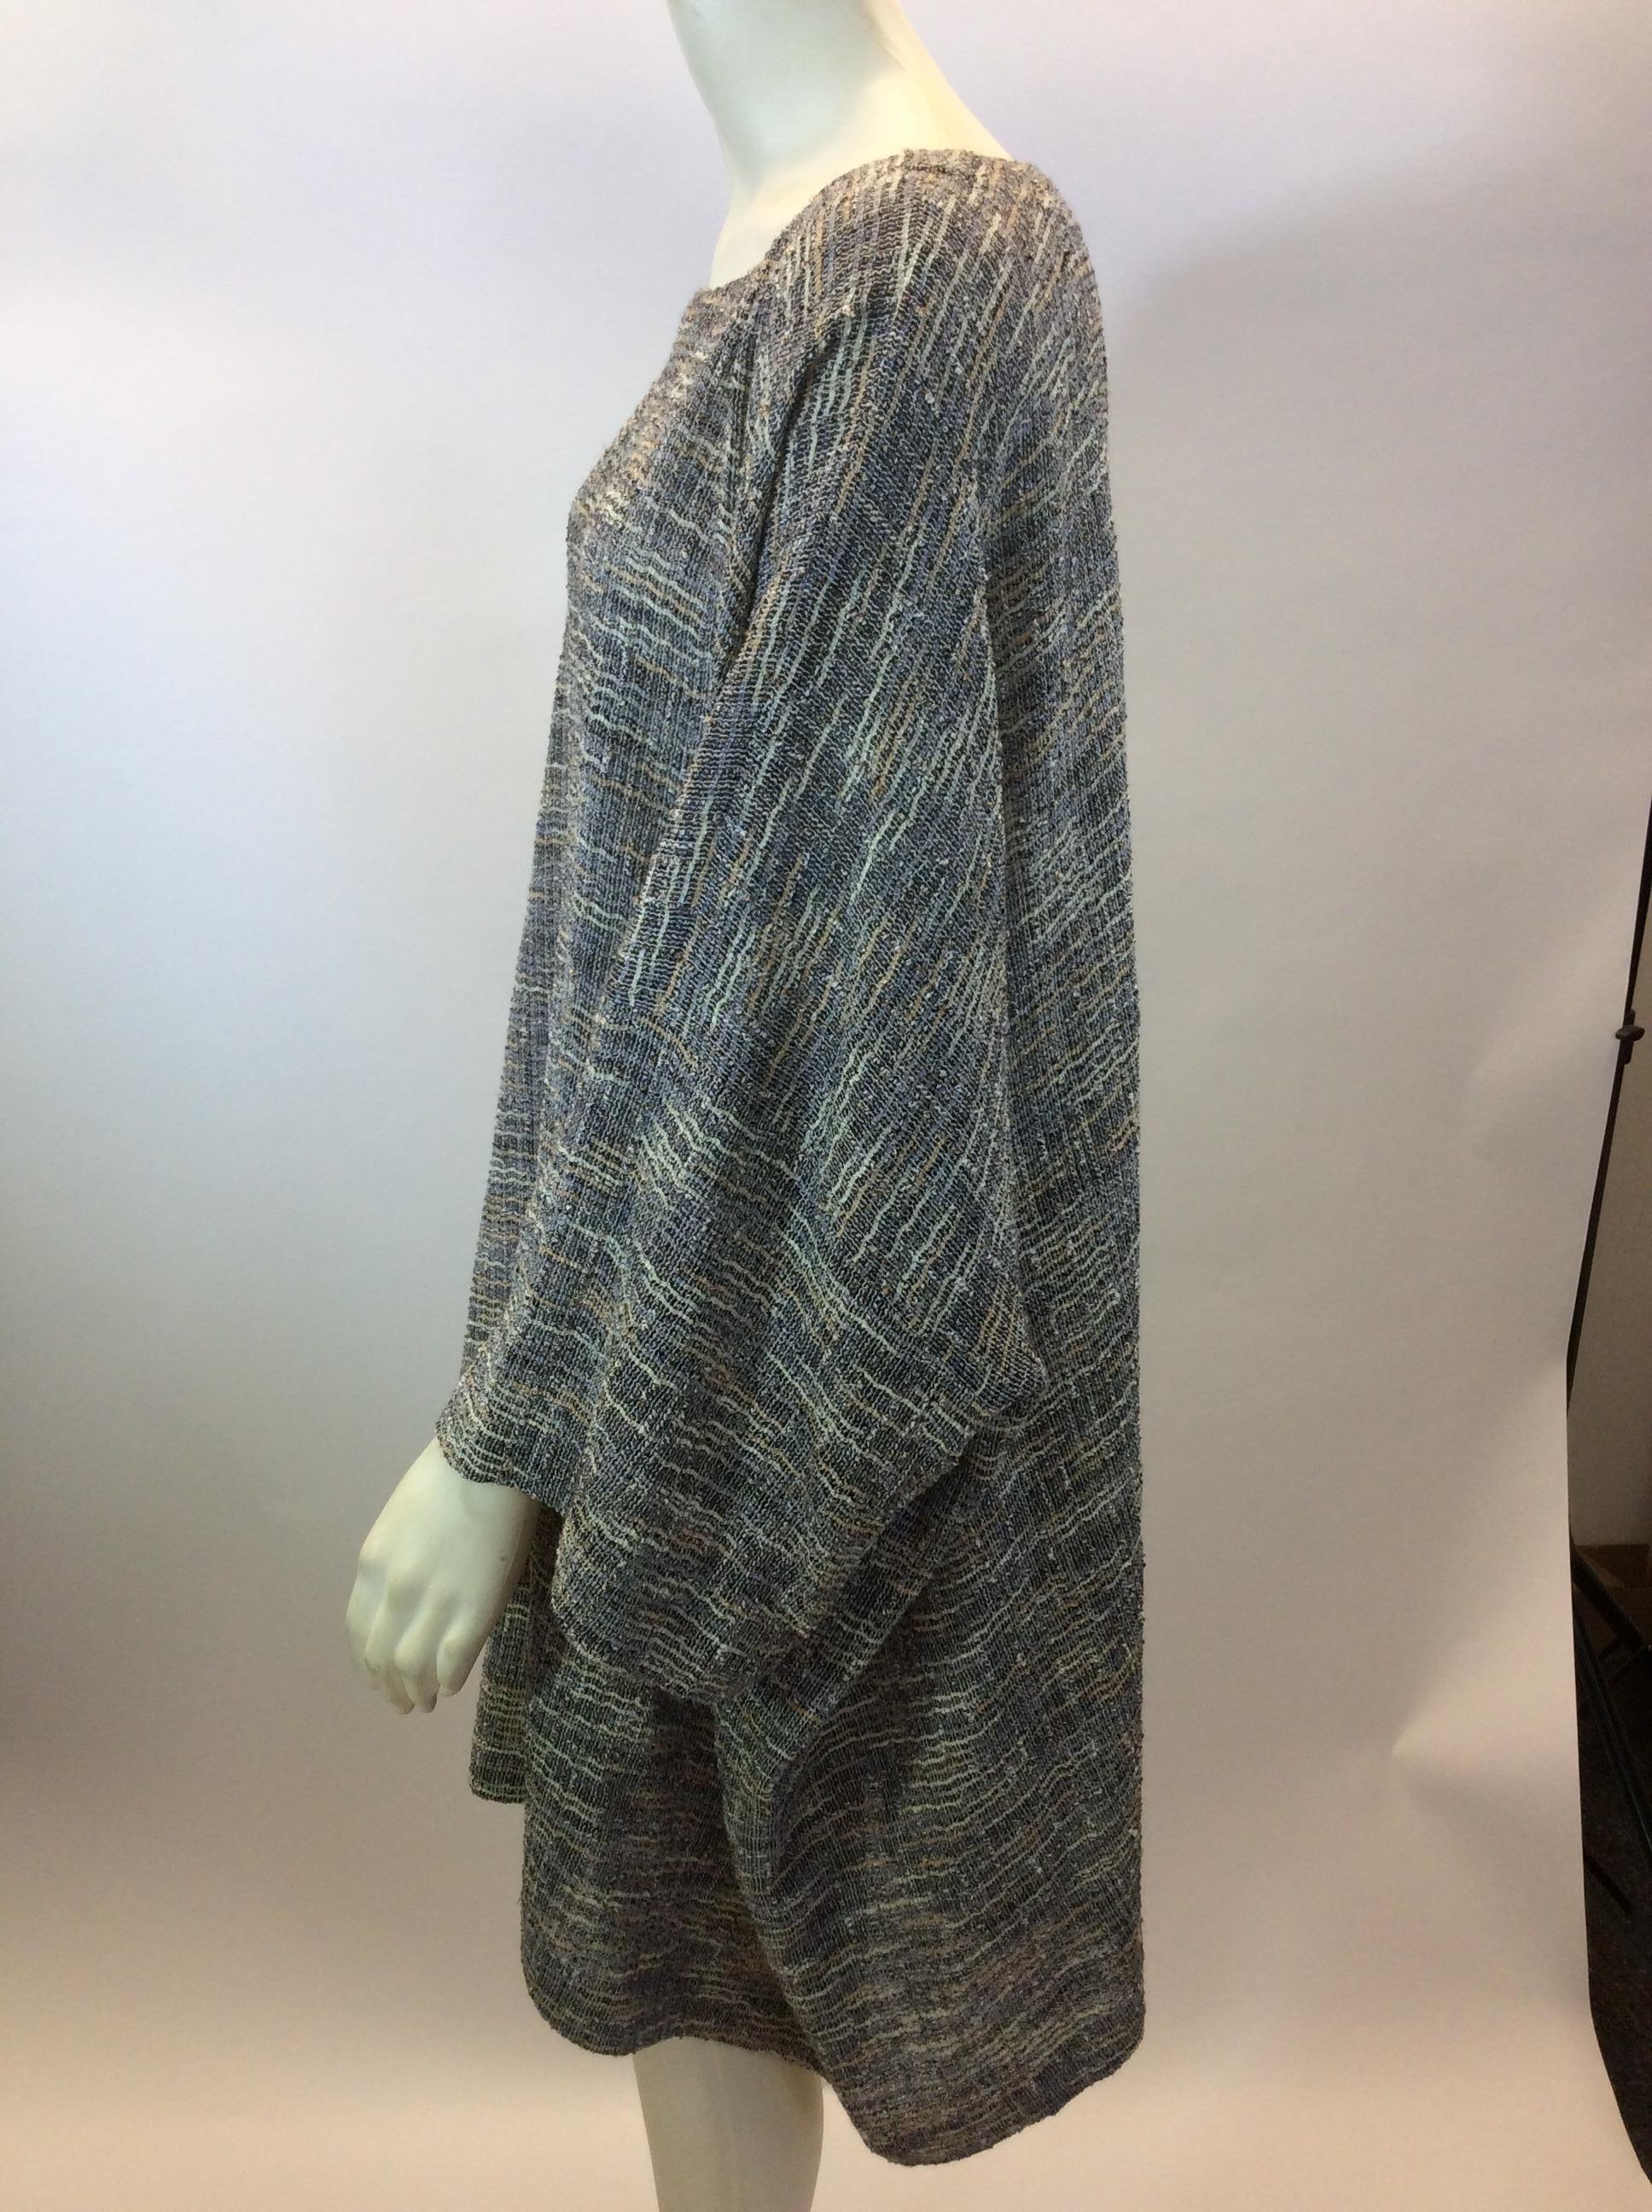 Eskandar Tweed Multi-Color Poncho
$299
Made in England
35% Cotton, 23% Polyamide, 21% Linen, 12% Polyester, 9% Acrylic 
Size 1 (Small)
Length: 33